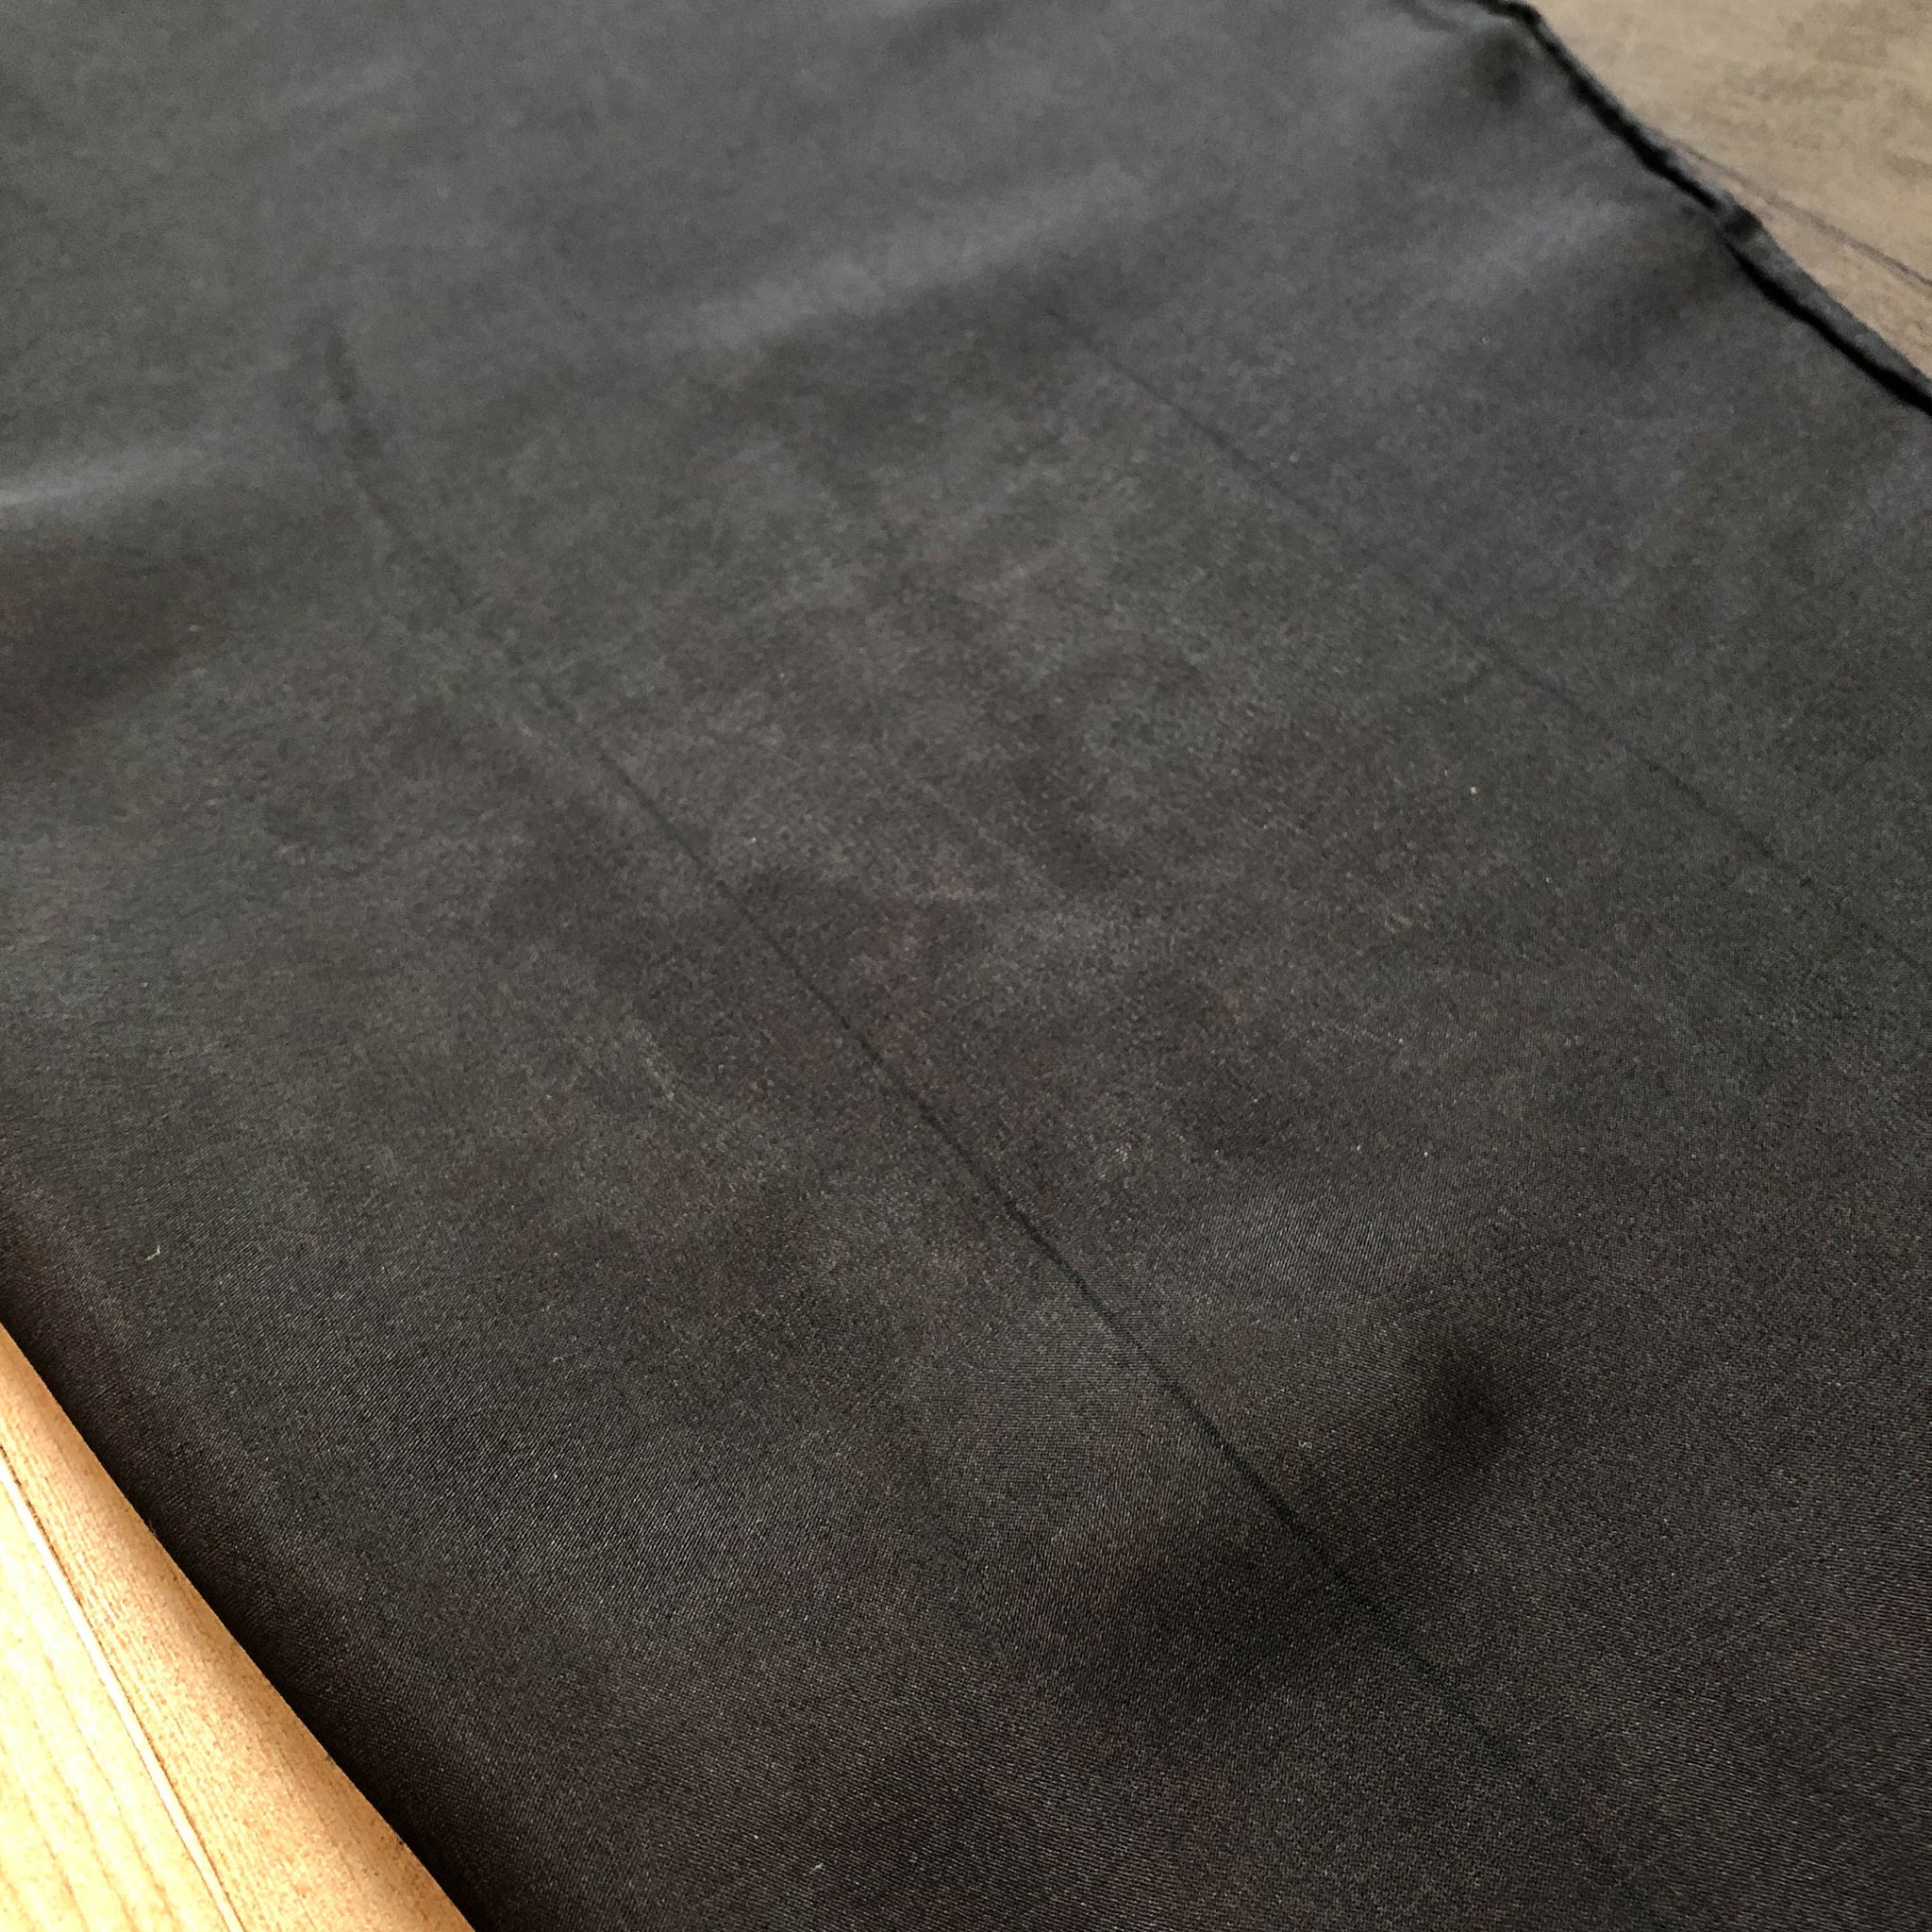 Iridescent Silk Chiffon Fabric by the Yard / Great for Nuno Felting / – The  Tin Thimble